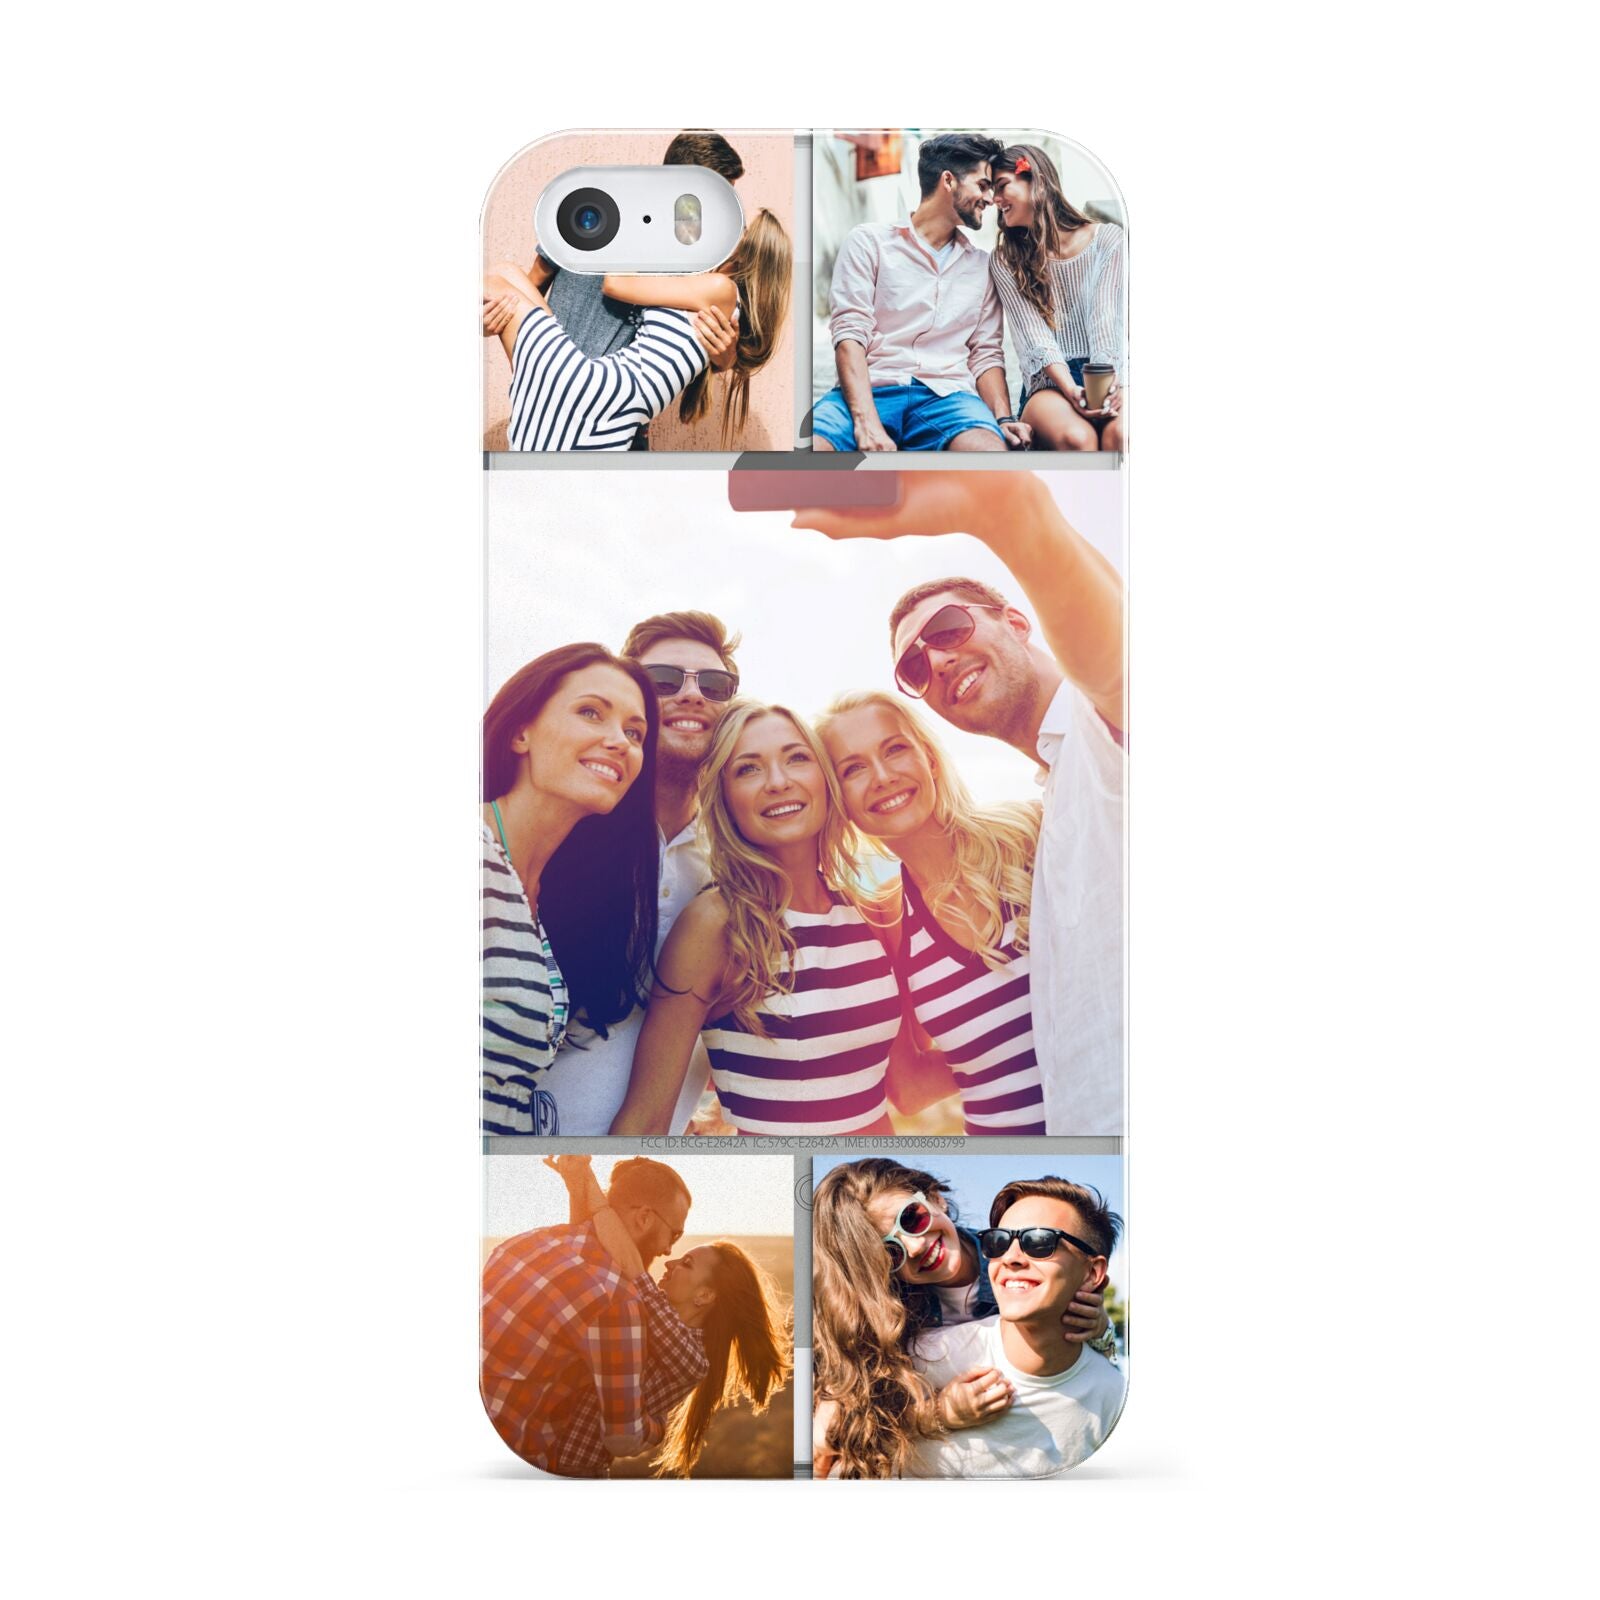 Tile Photo Collage Upload Apple iPhone 5 Case